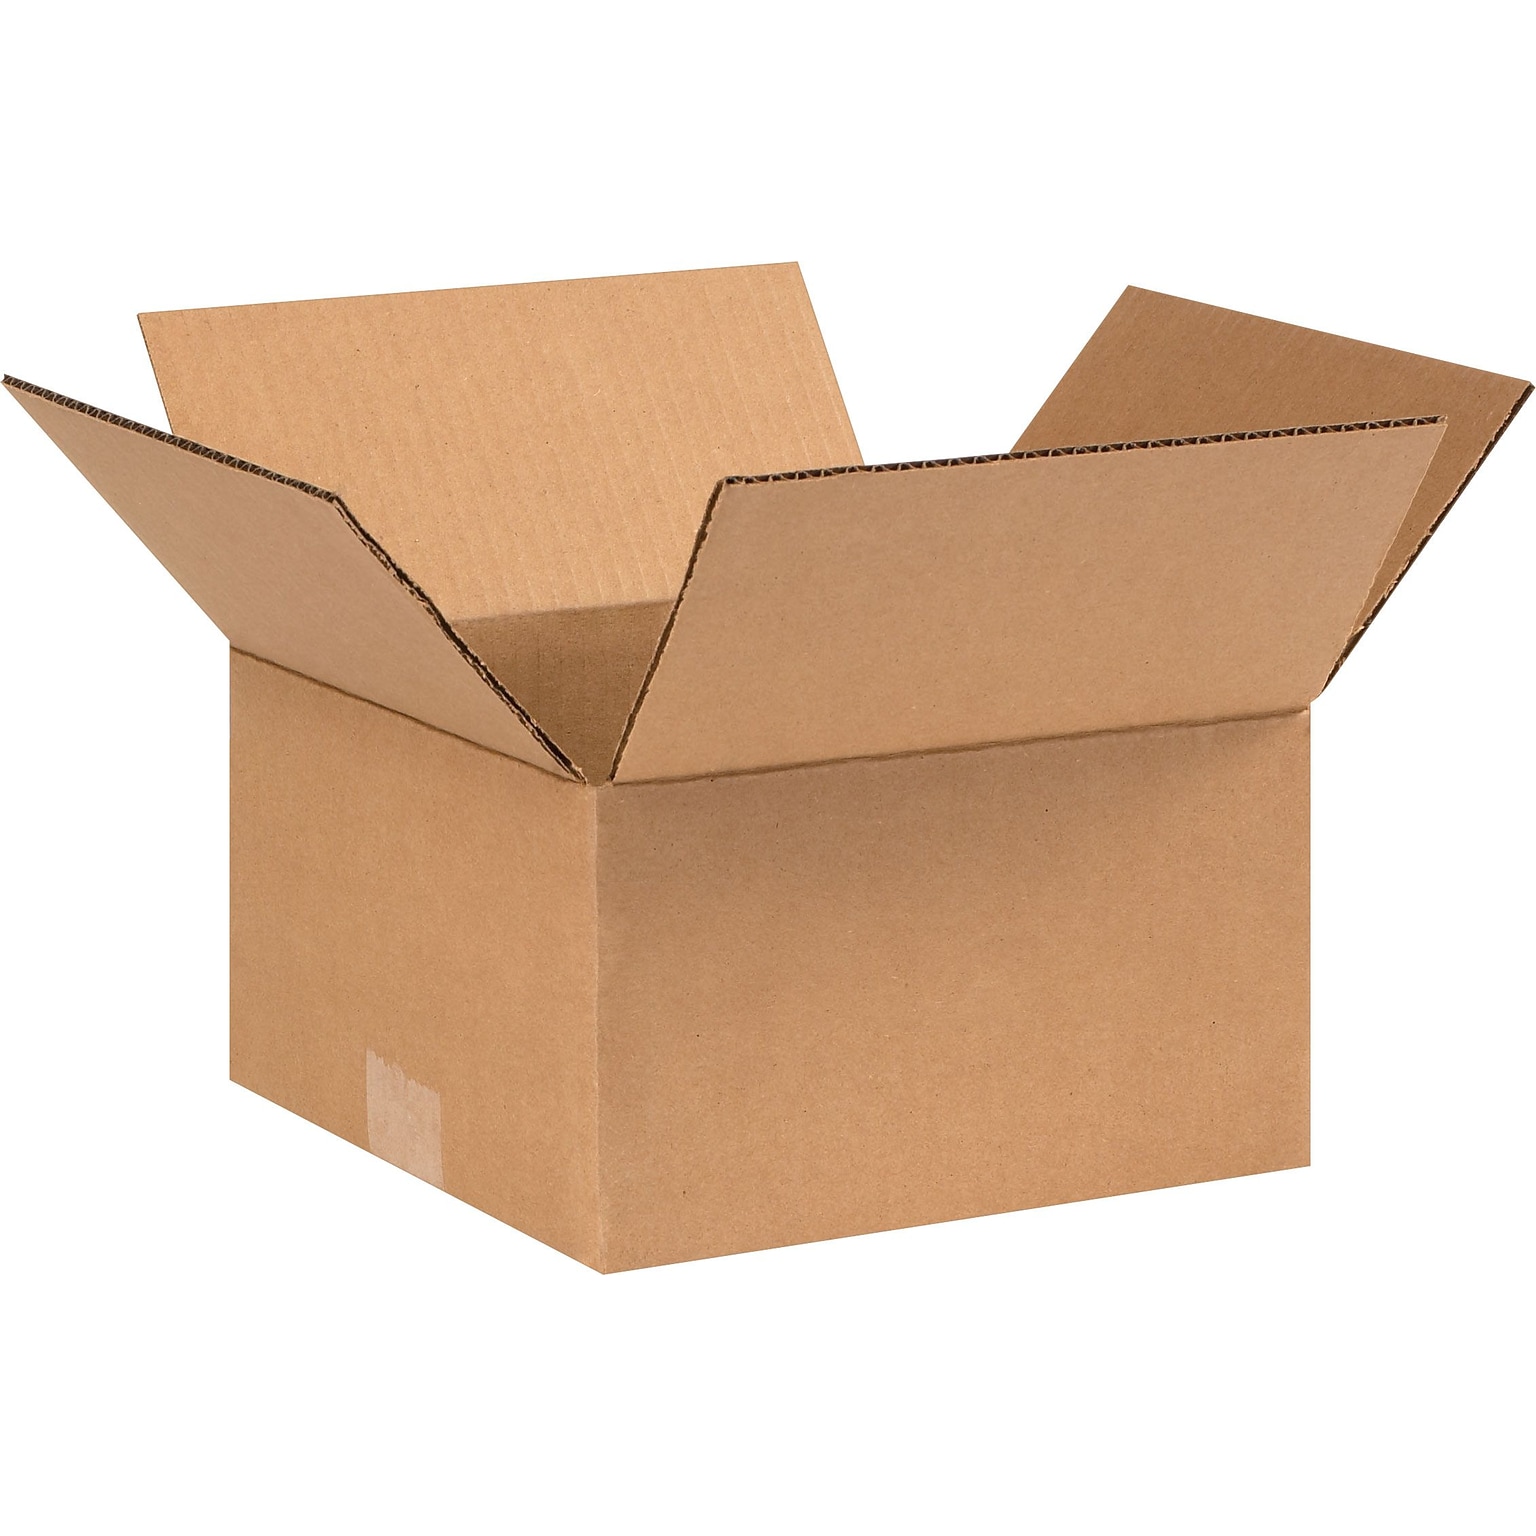 9 x 9 x 5 Shipping Boxes, 32 ECT, Brown, 25/Bundle (995)